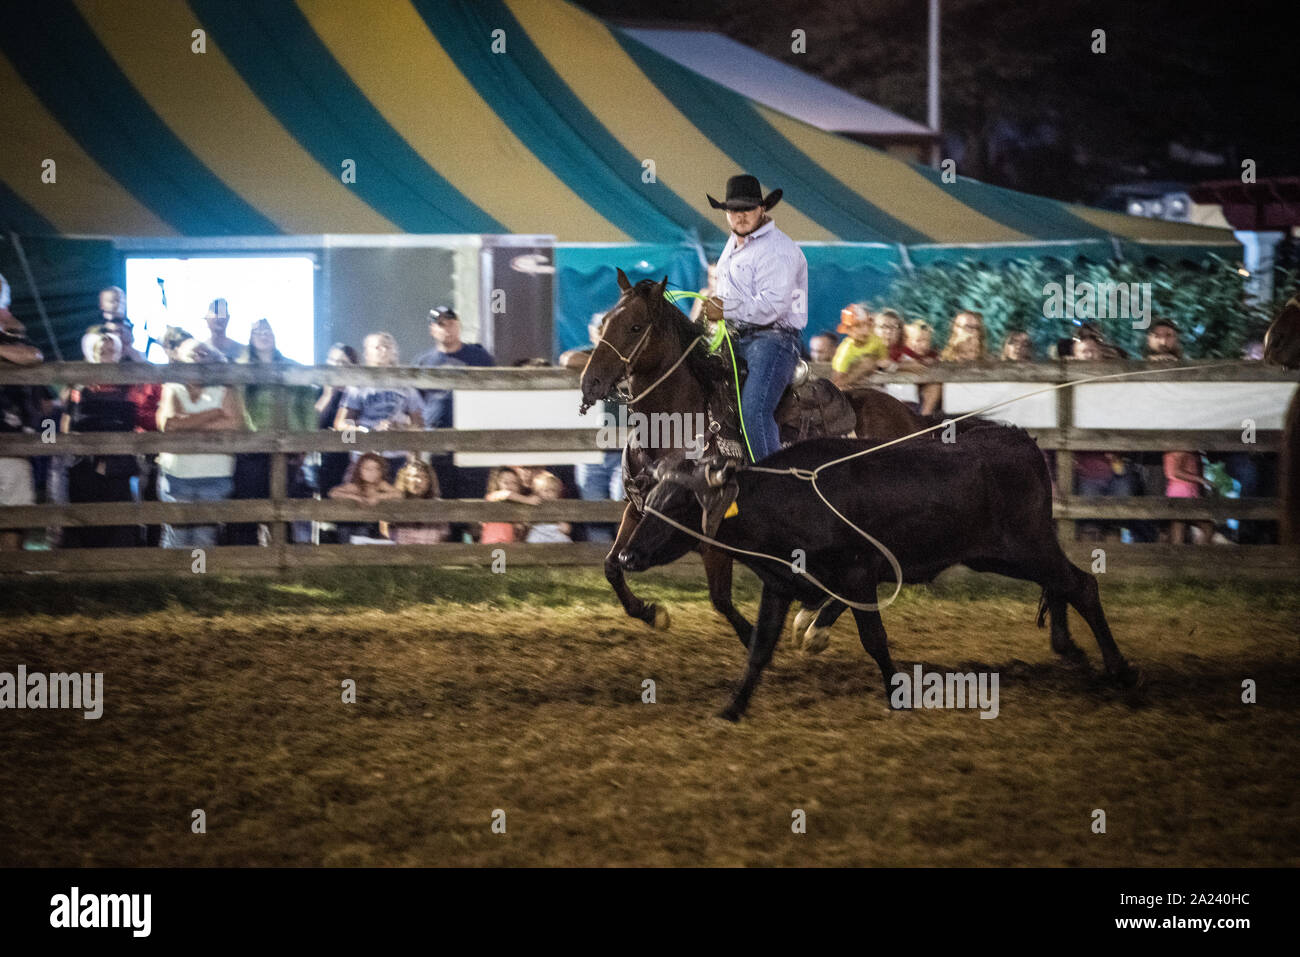 Country Fair Calf Roping Wettbewerb. Stockfoto